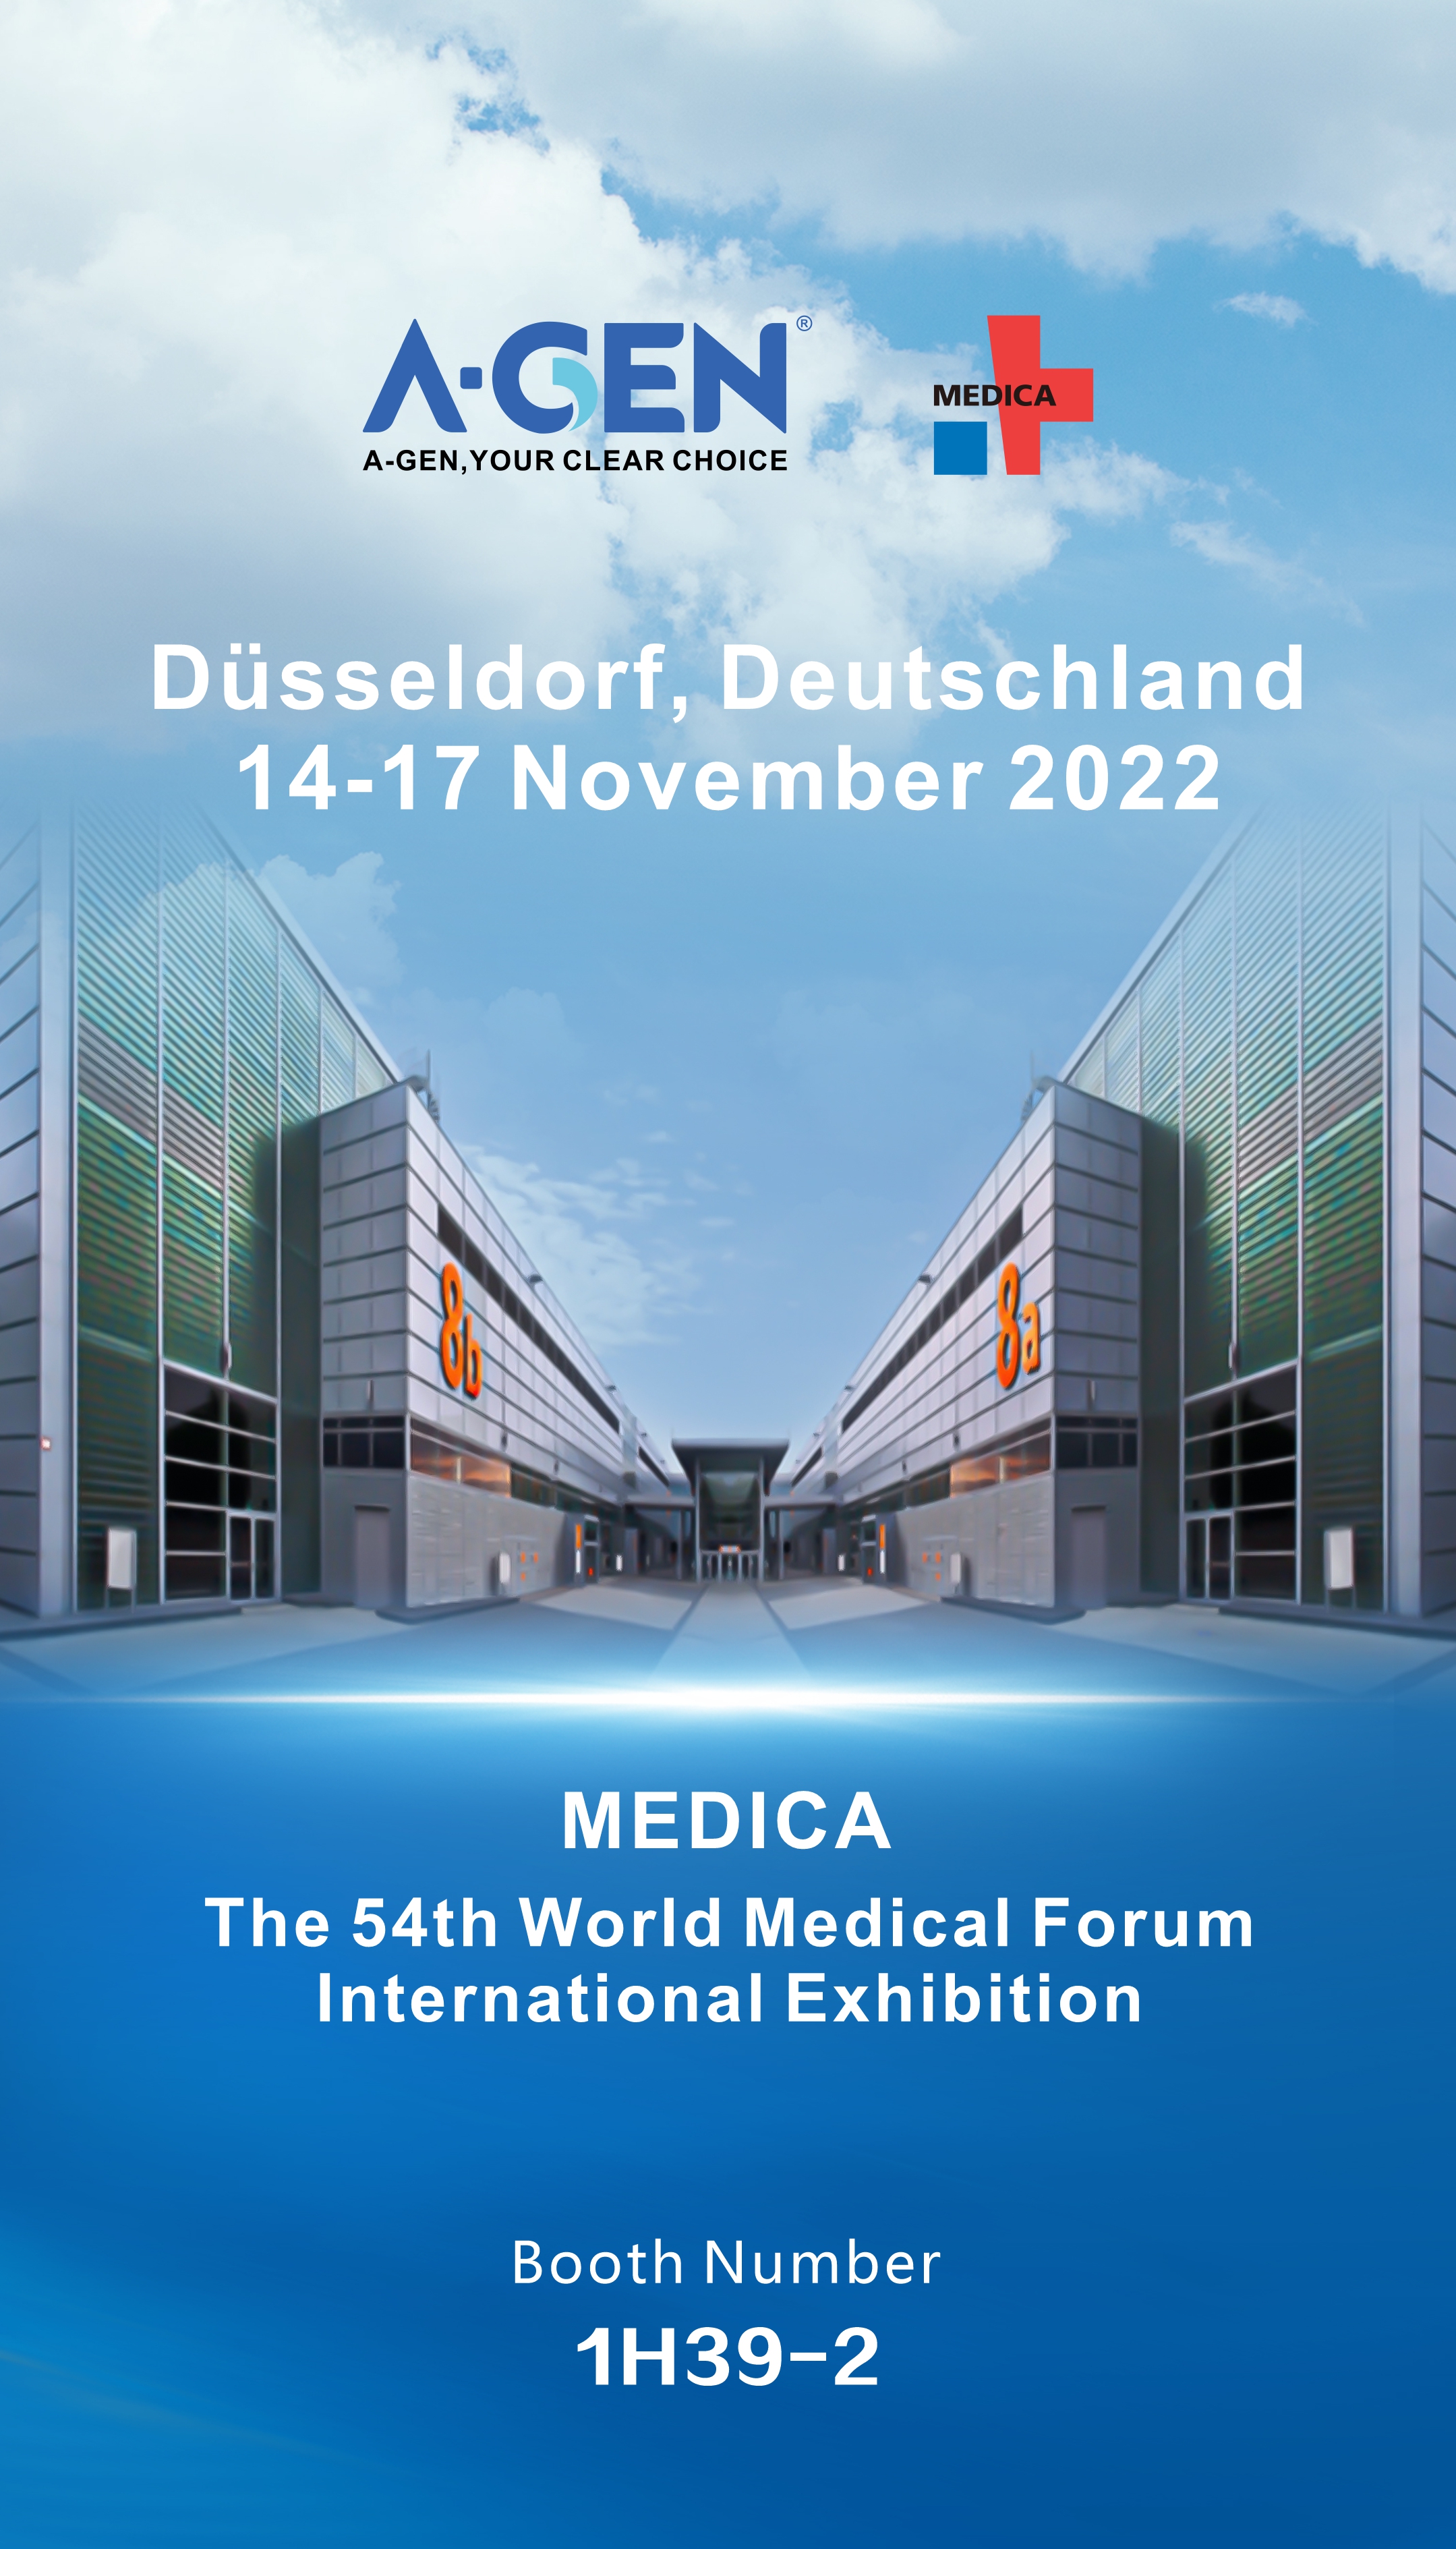 MEDICA 2022, Nov 14-17th, Germany. Booth number 1H39-2